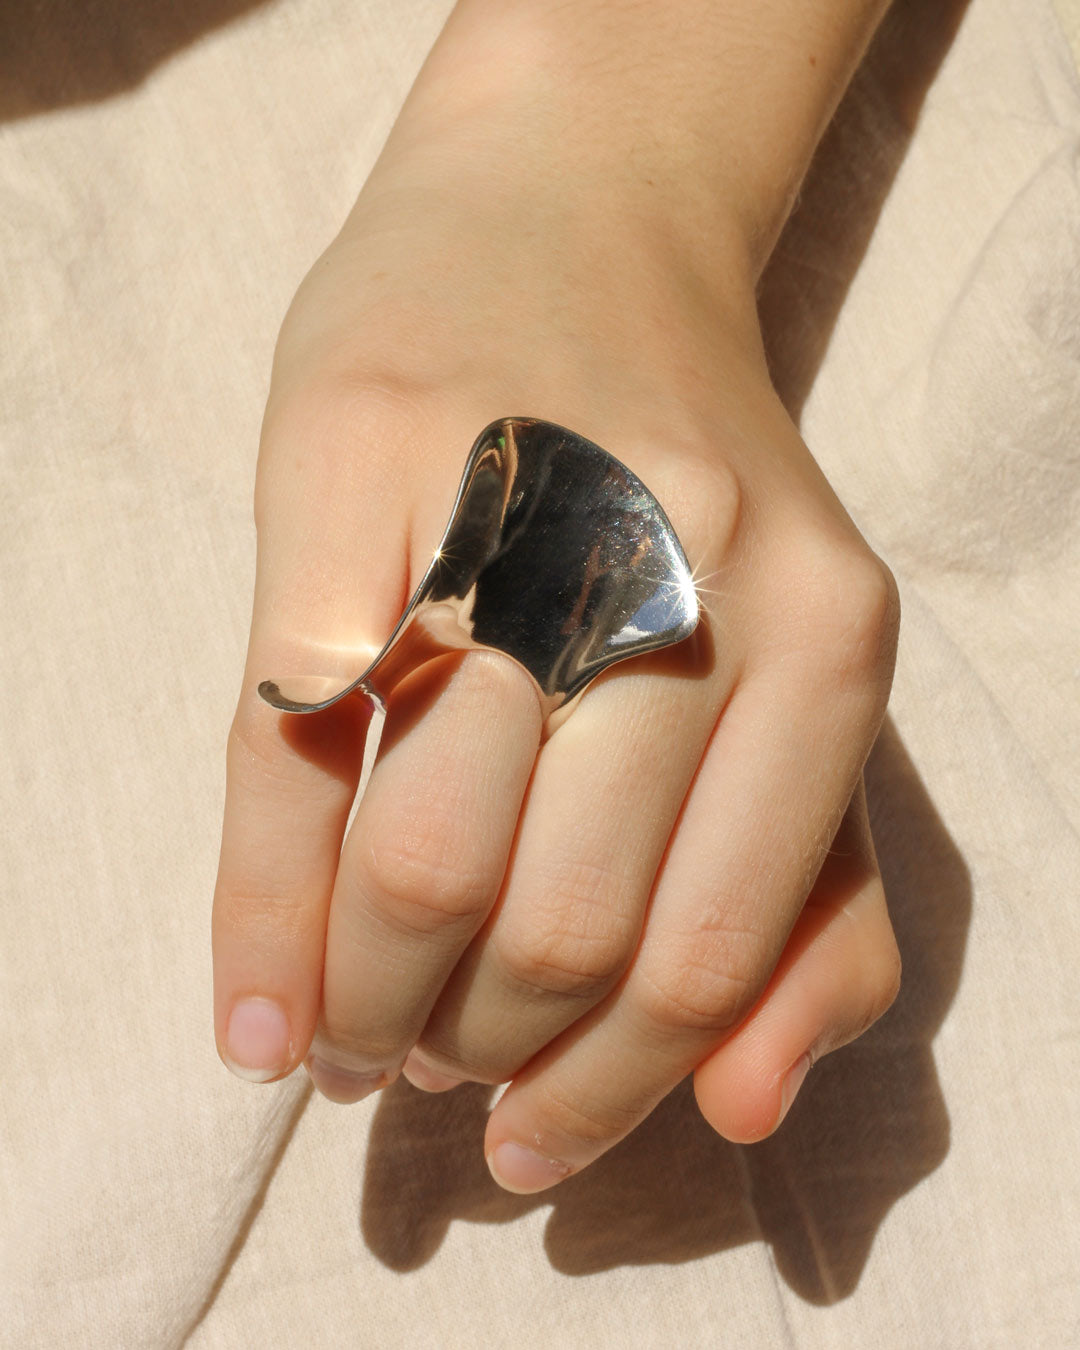 Handmade silver ring - Tabitha Sowden